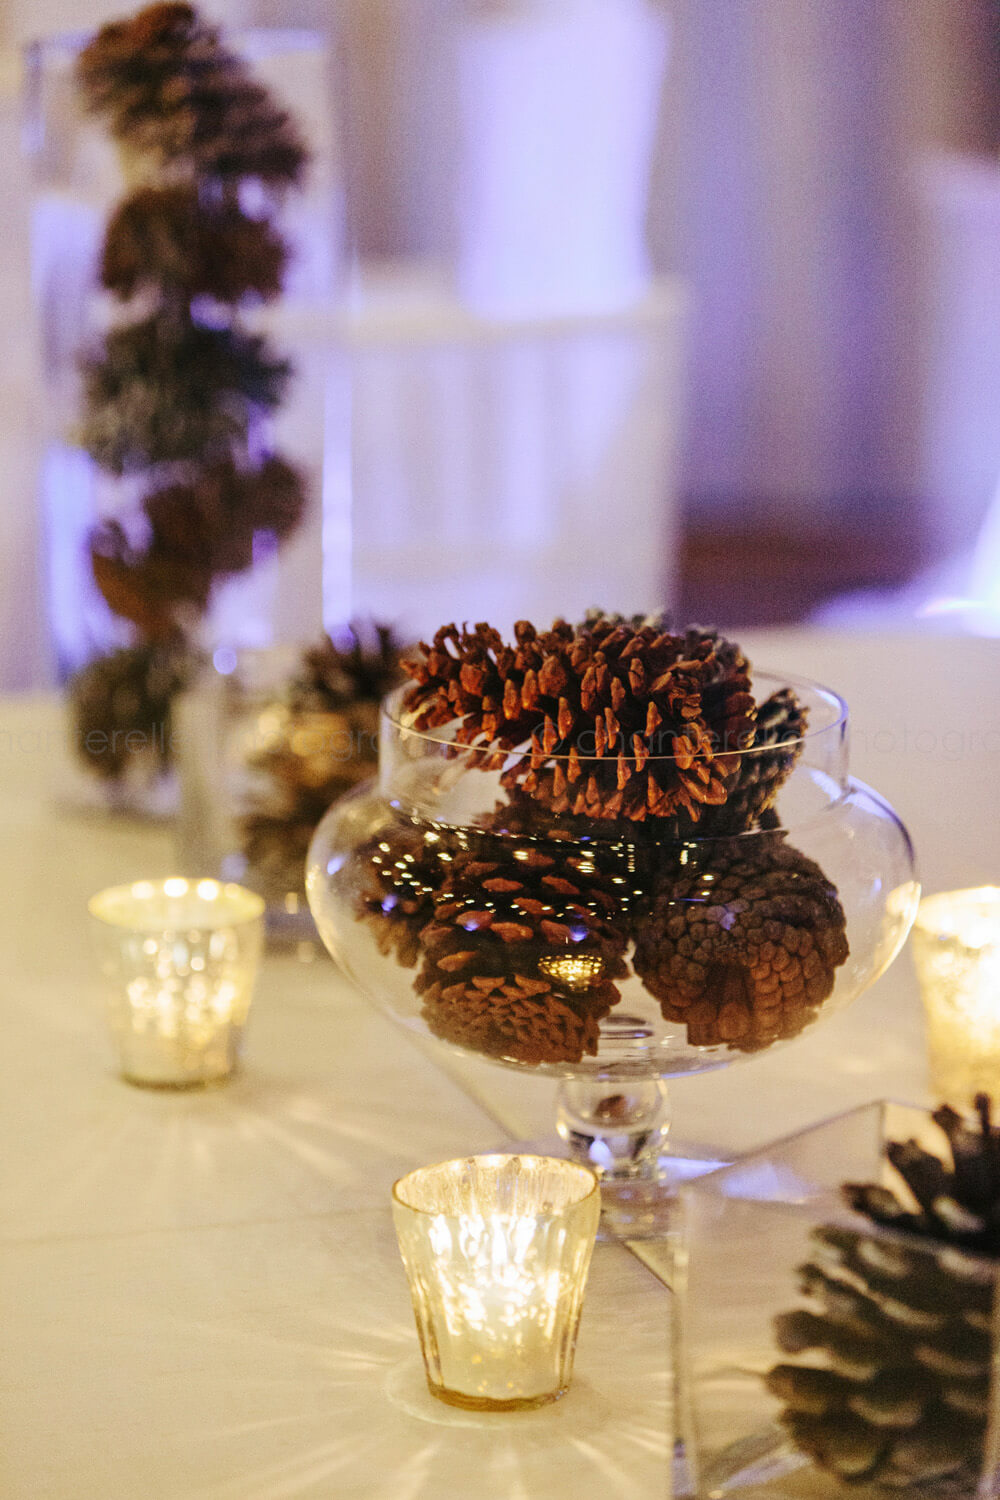 pinecone table decor at wedding reception